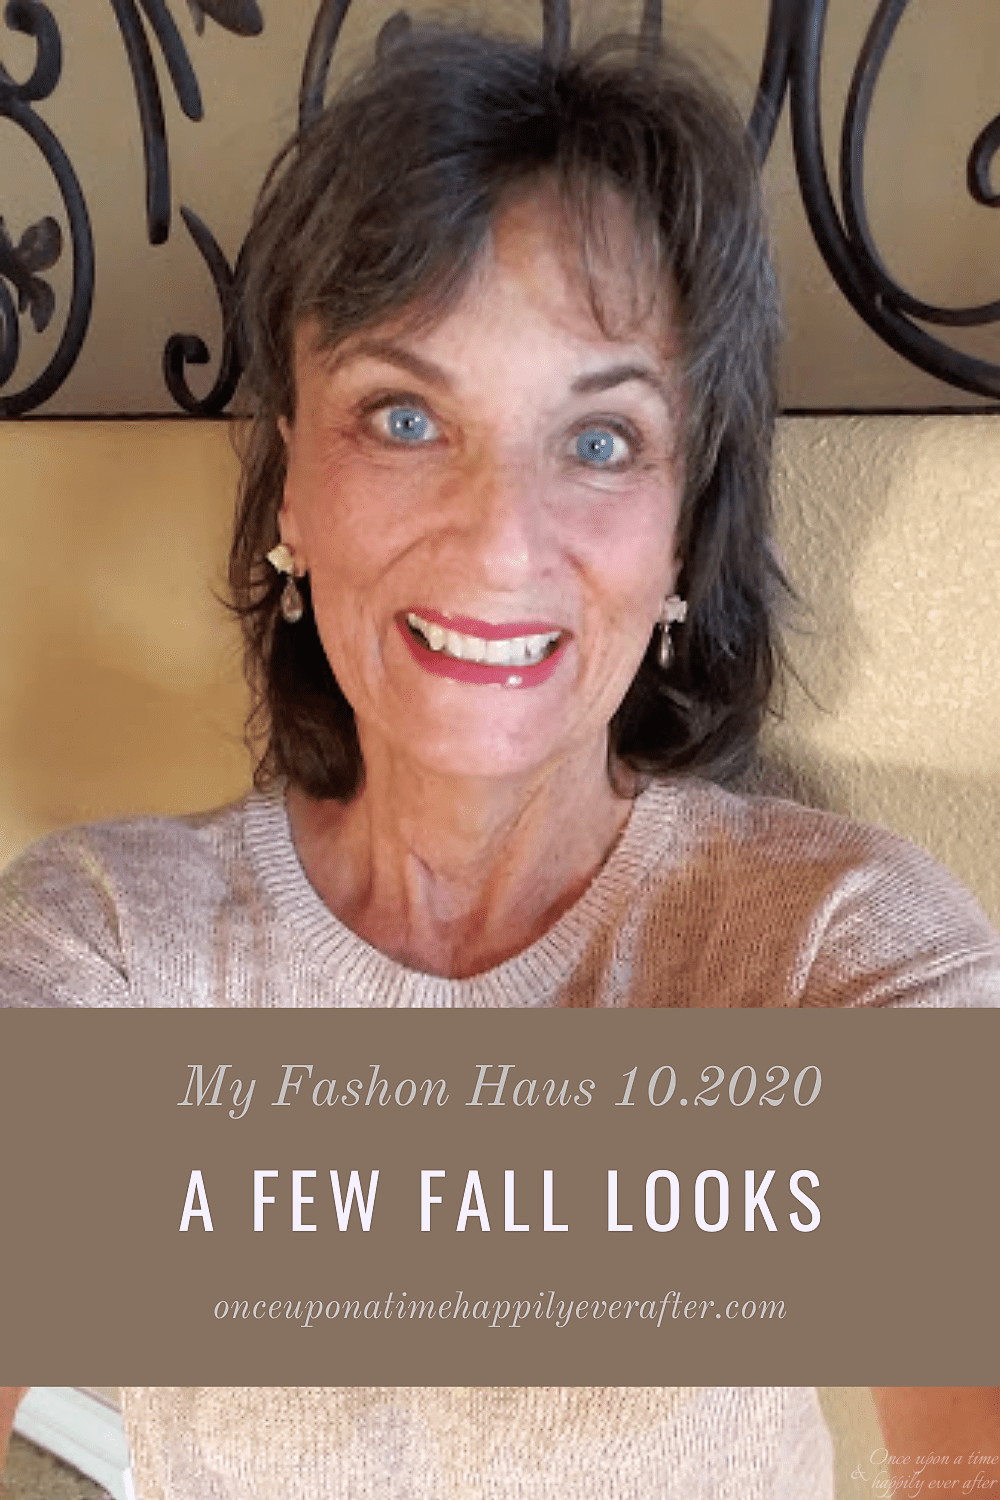 A Few Fall Looks: My Fashion Haus 10.2020